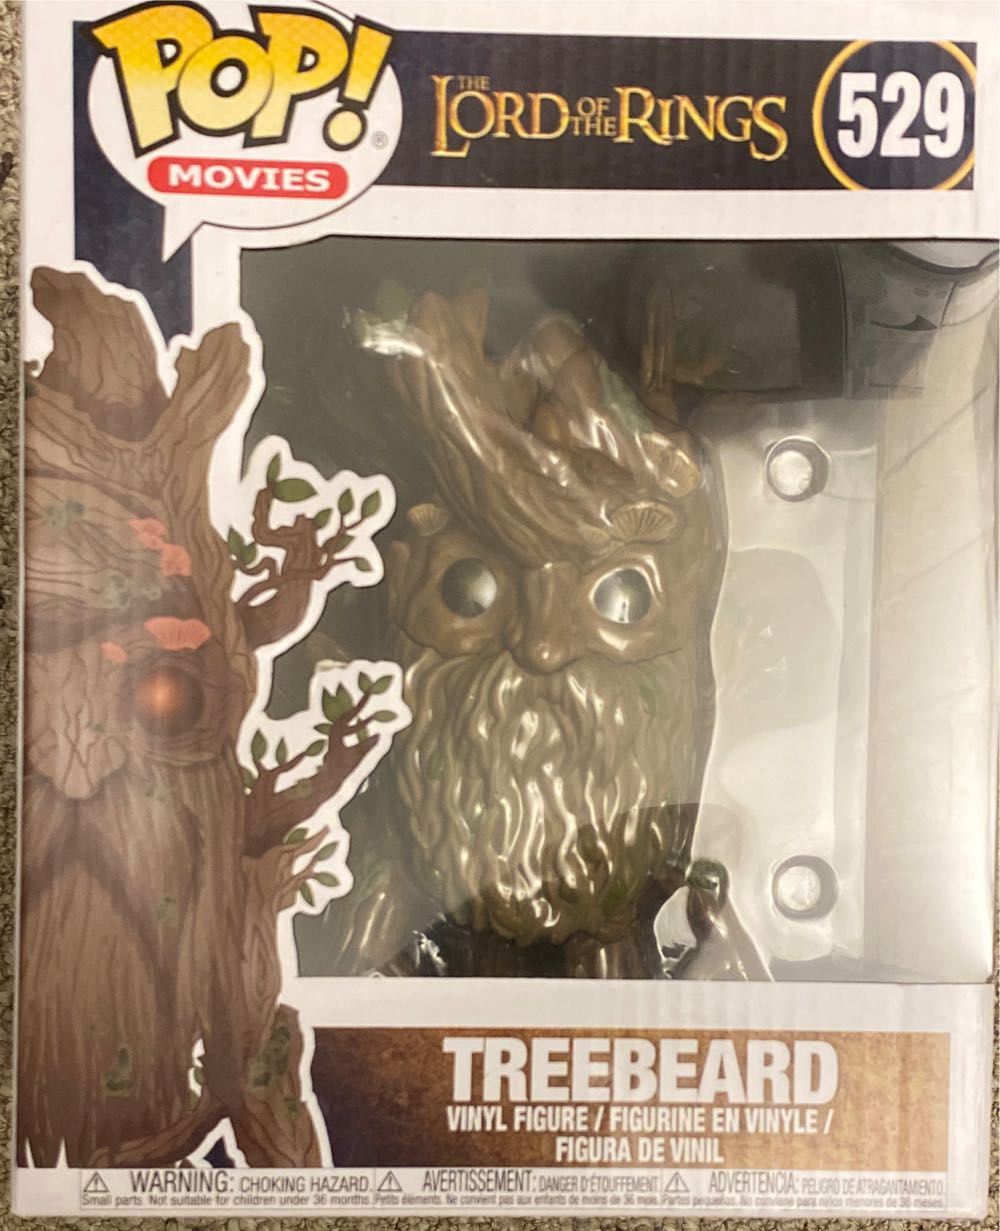  Treebeard  - Funko action figure collectible [Barcode 889698135603] - Main Image 1